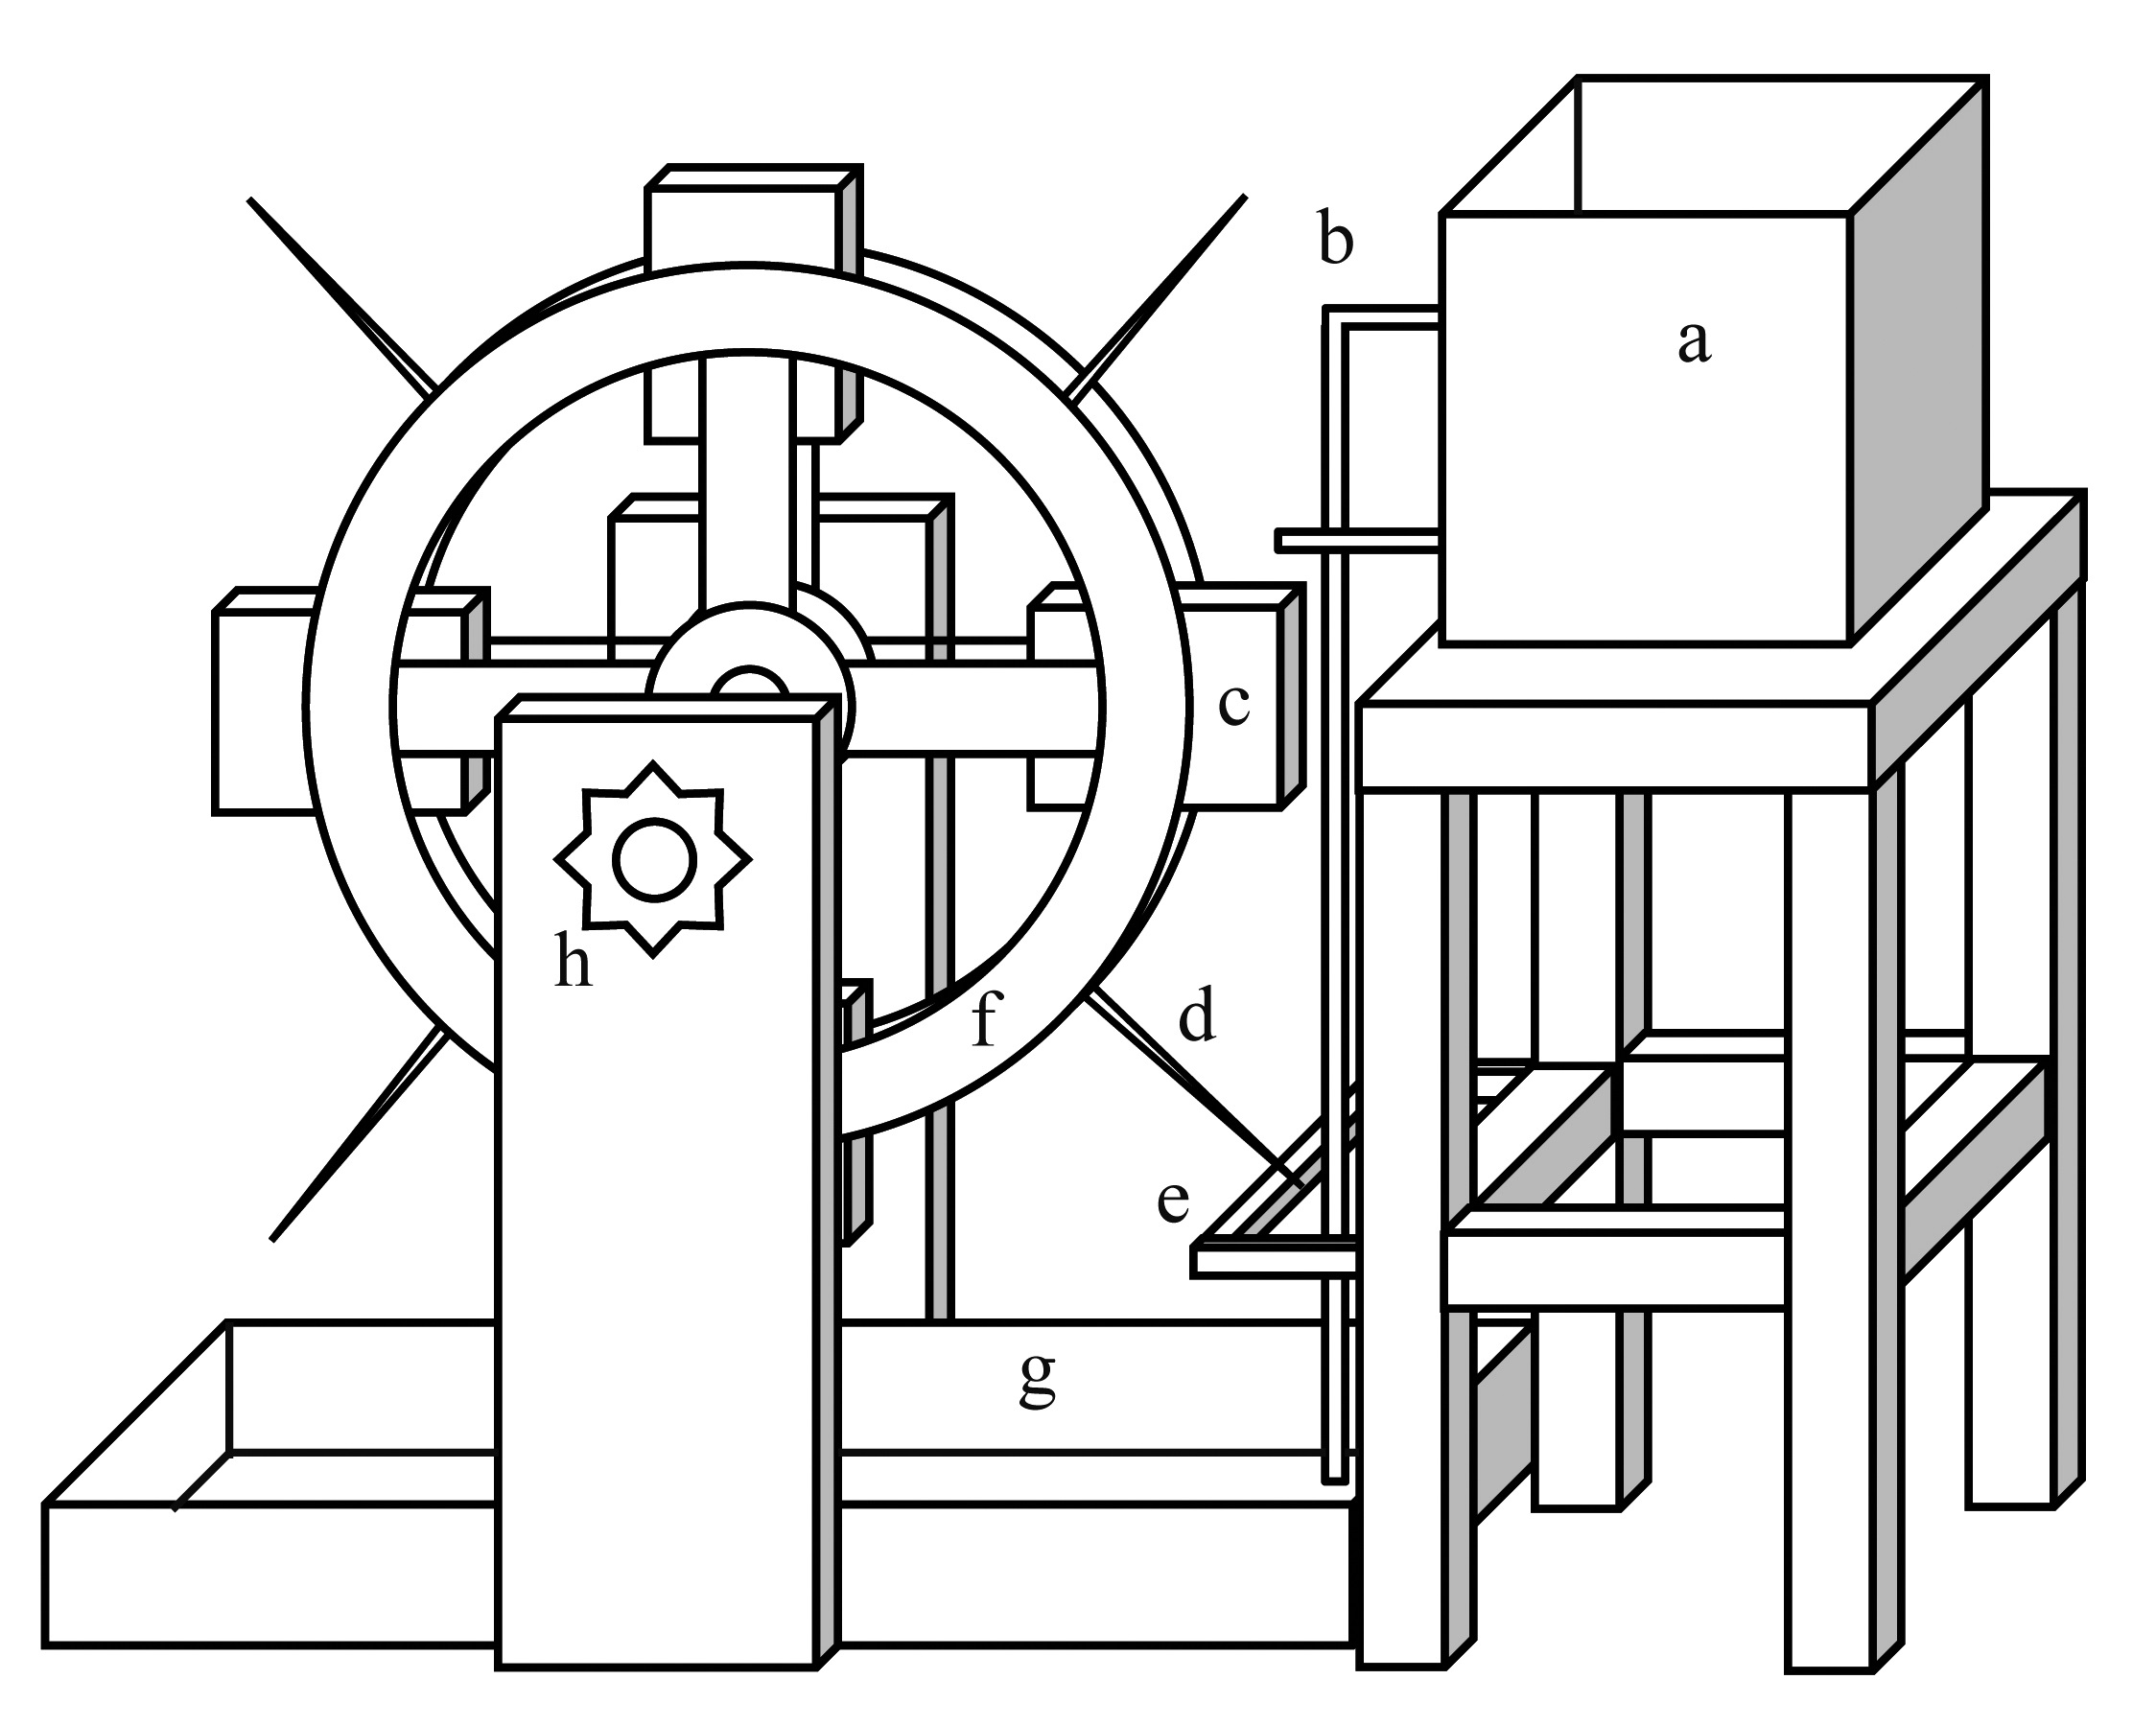 Power model of Honsangui. a. Suu(1)(Pasuho, 播水壺), b. overflow, c.
Suho (水壺), d. Cheolcheok (鐵尺), e. Geolteok, f. water wheel, g. Suu(2)(Toesuho,
退水壺), h. mechanism wheel tooth (機輪牙)